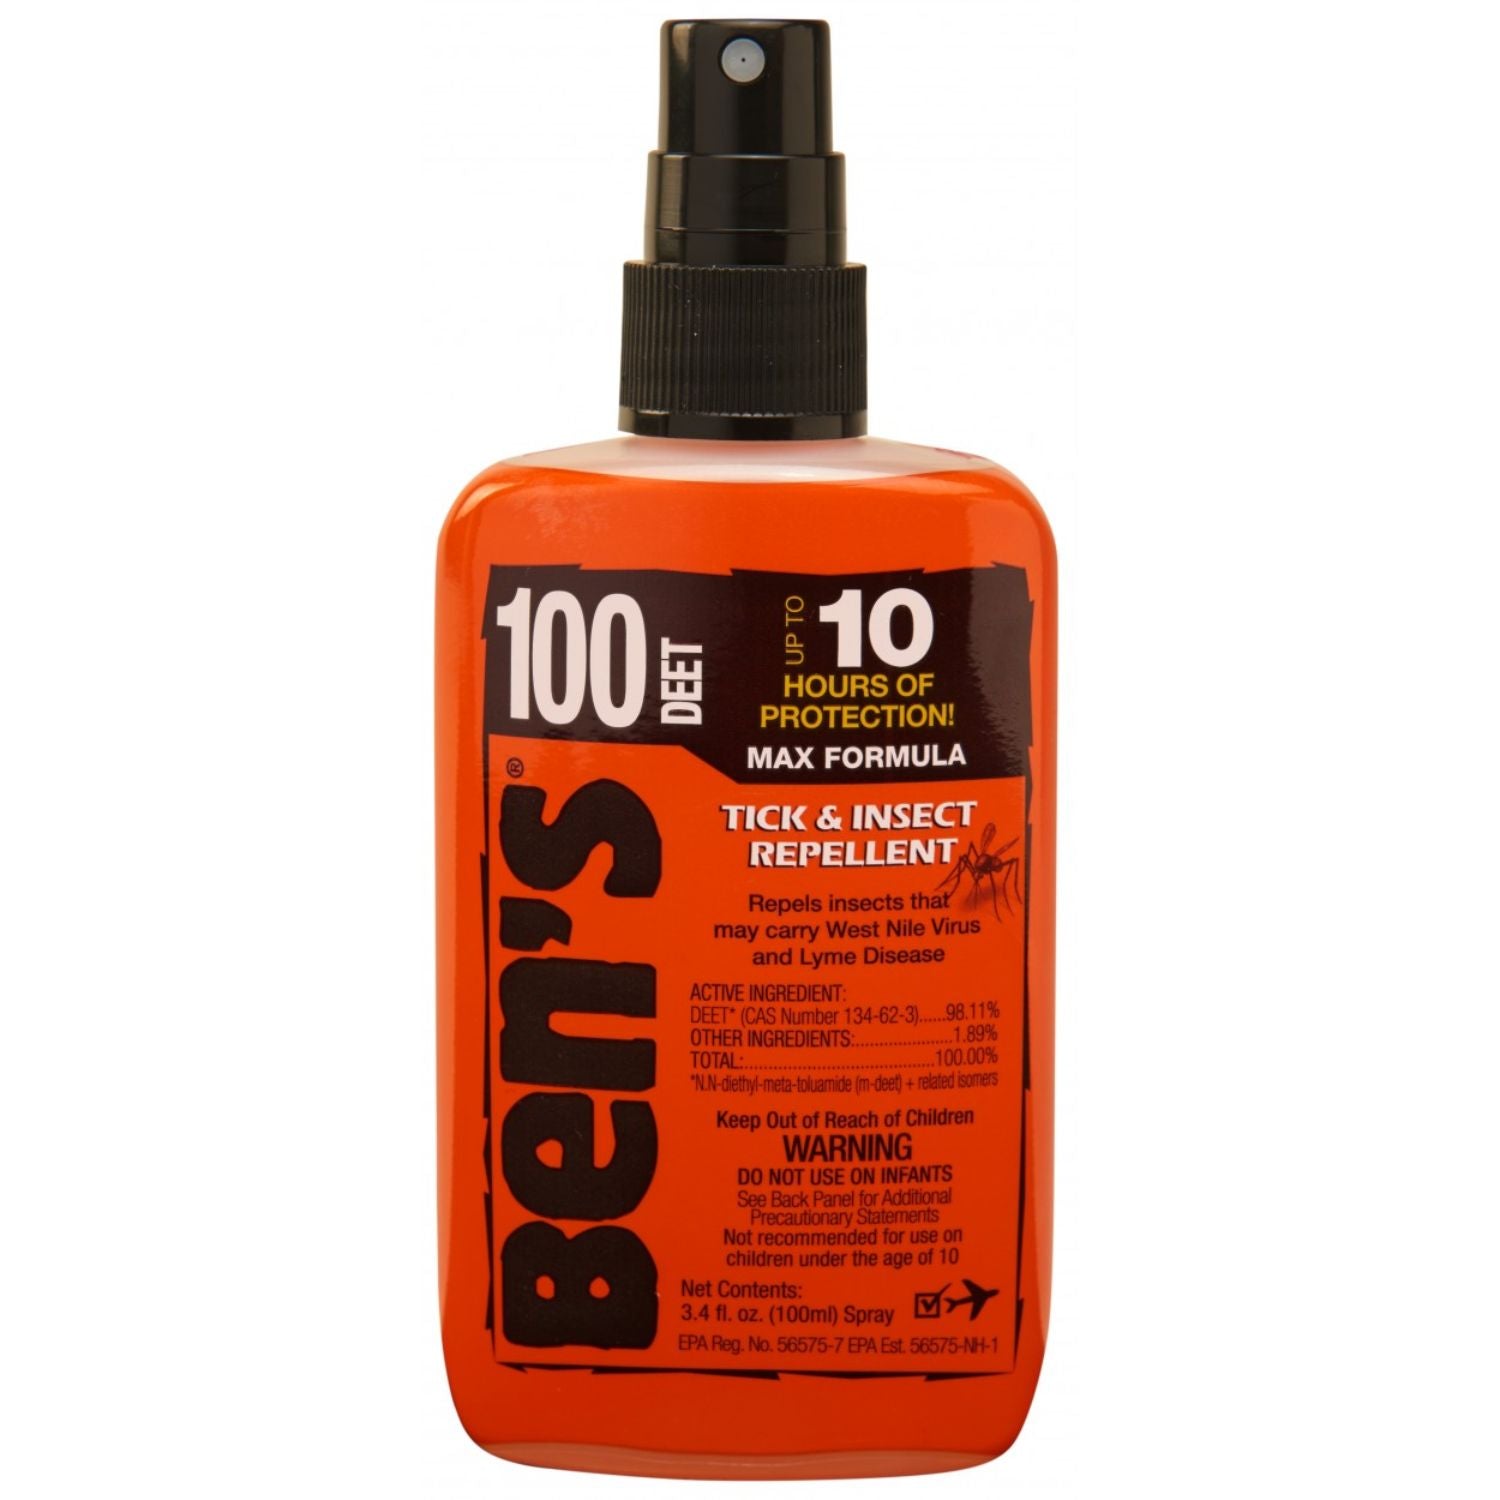 Bens 100 Tick and Insect Repellent Pump 3.4 oz